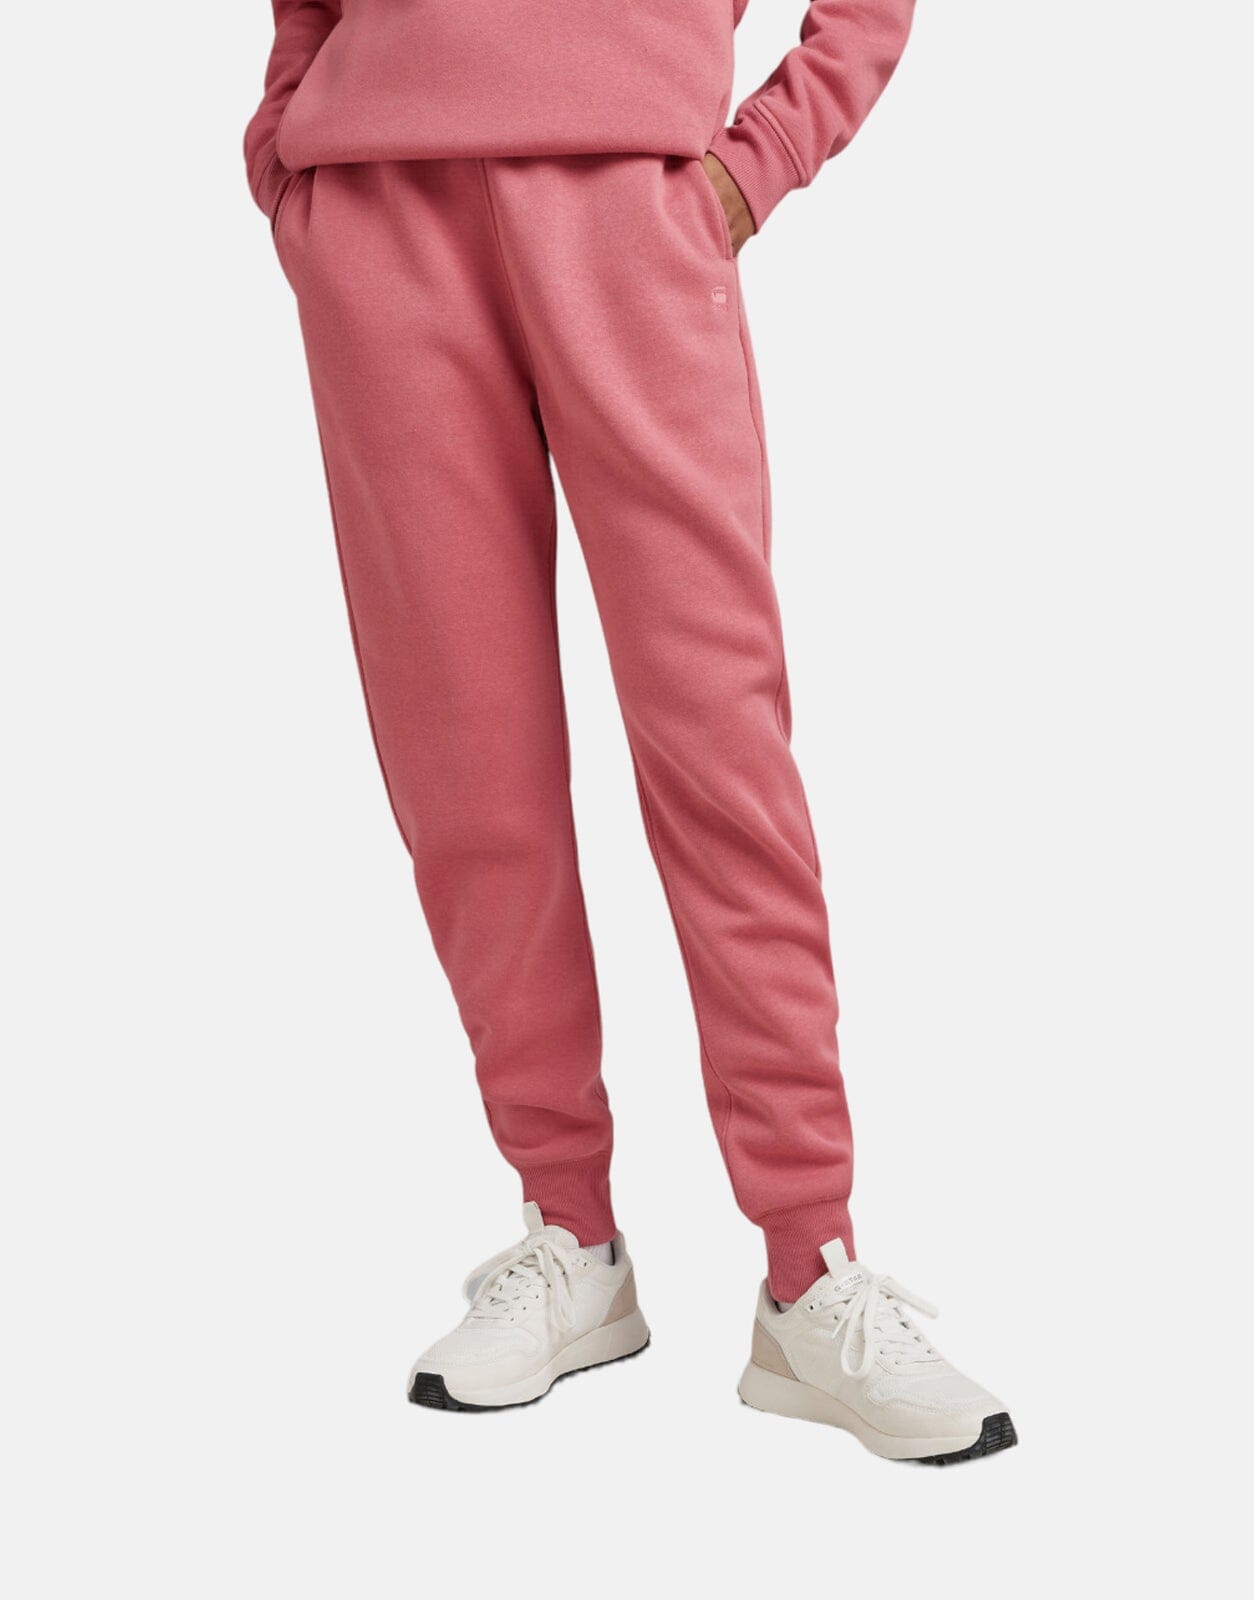 G-Star RAW Premium Core 2.0 Pants - Subwear